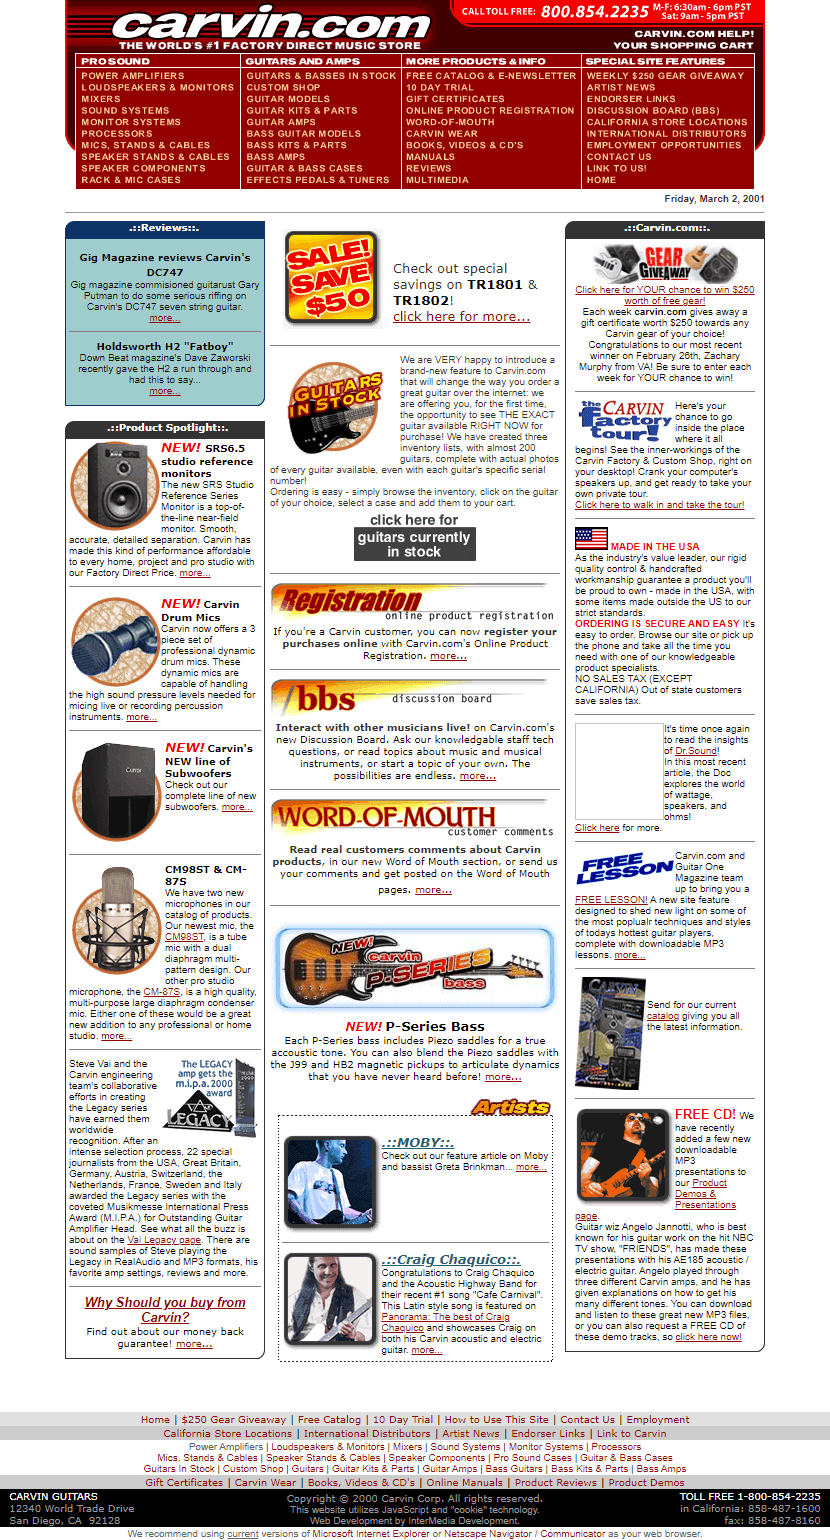 Carvin Guitars in 2001